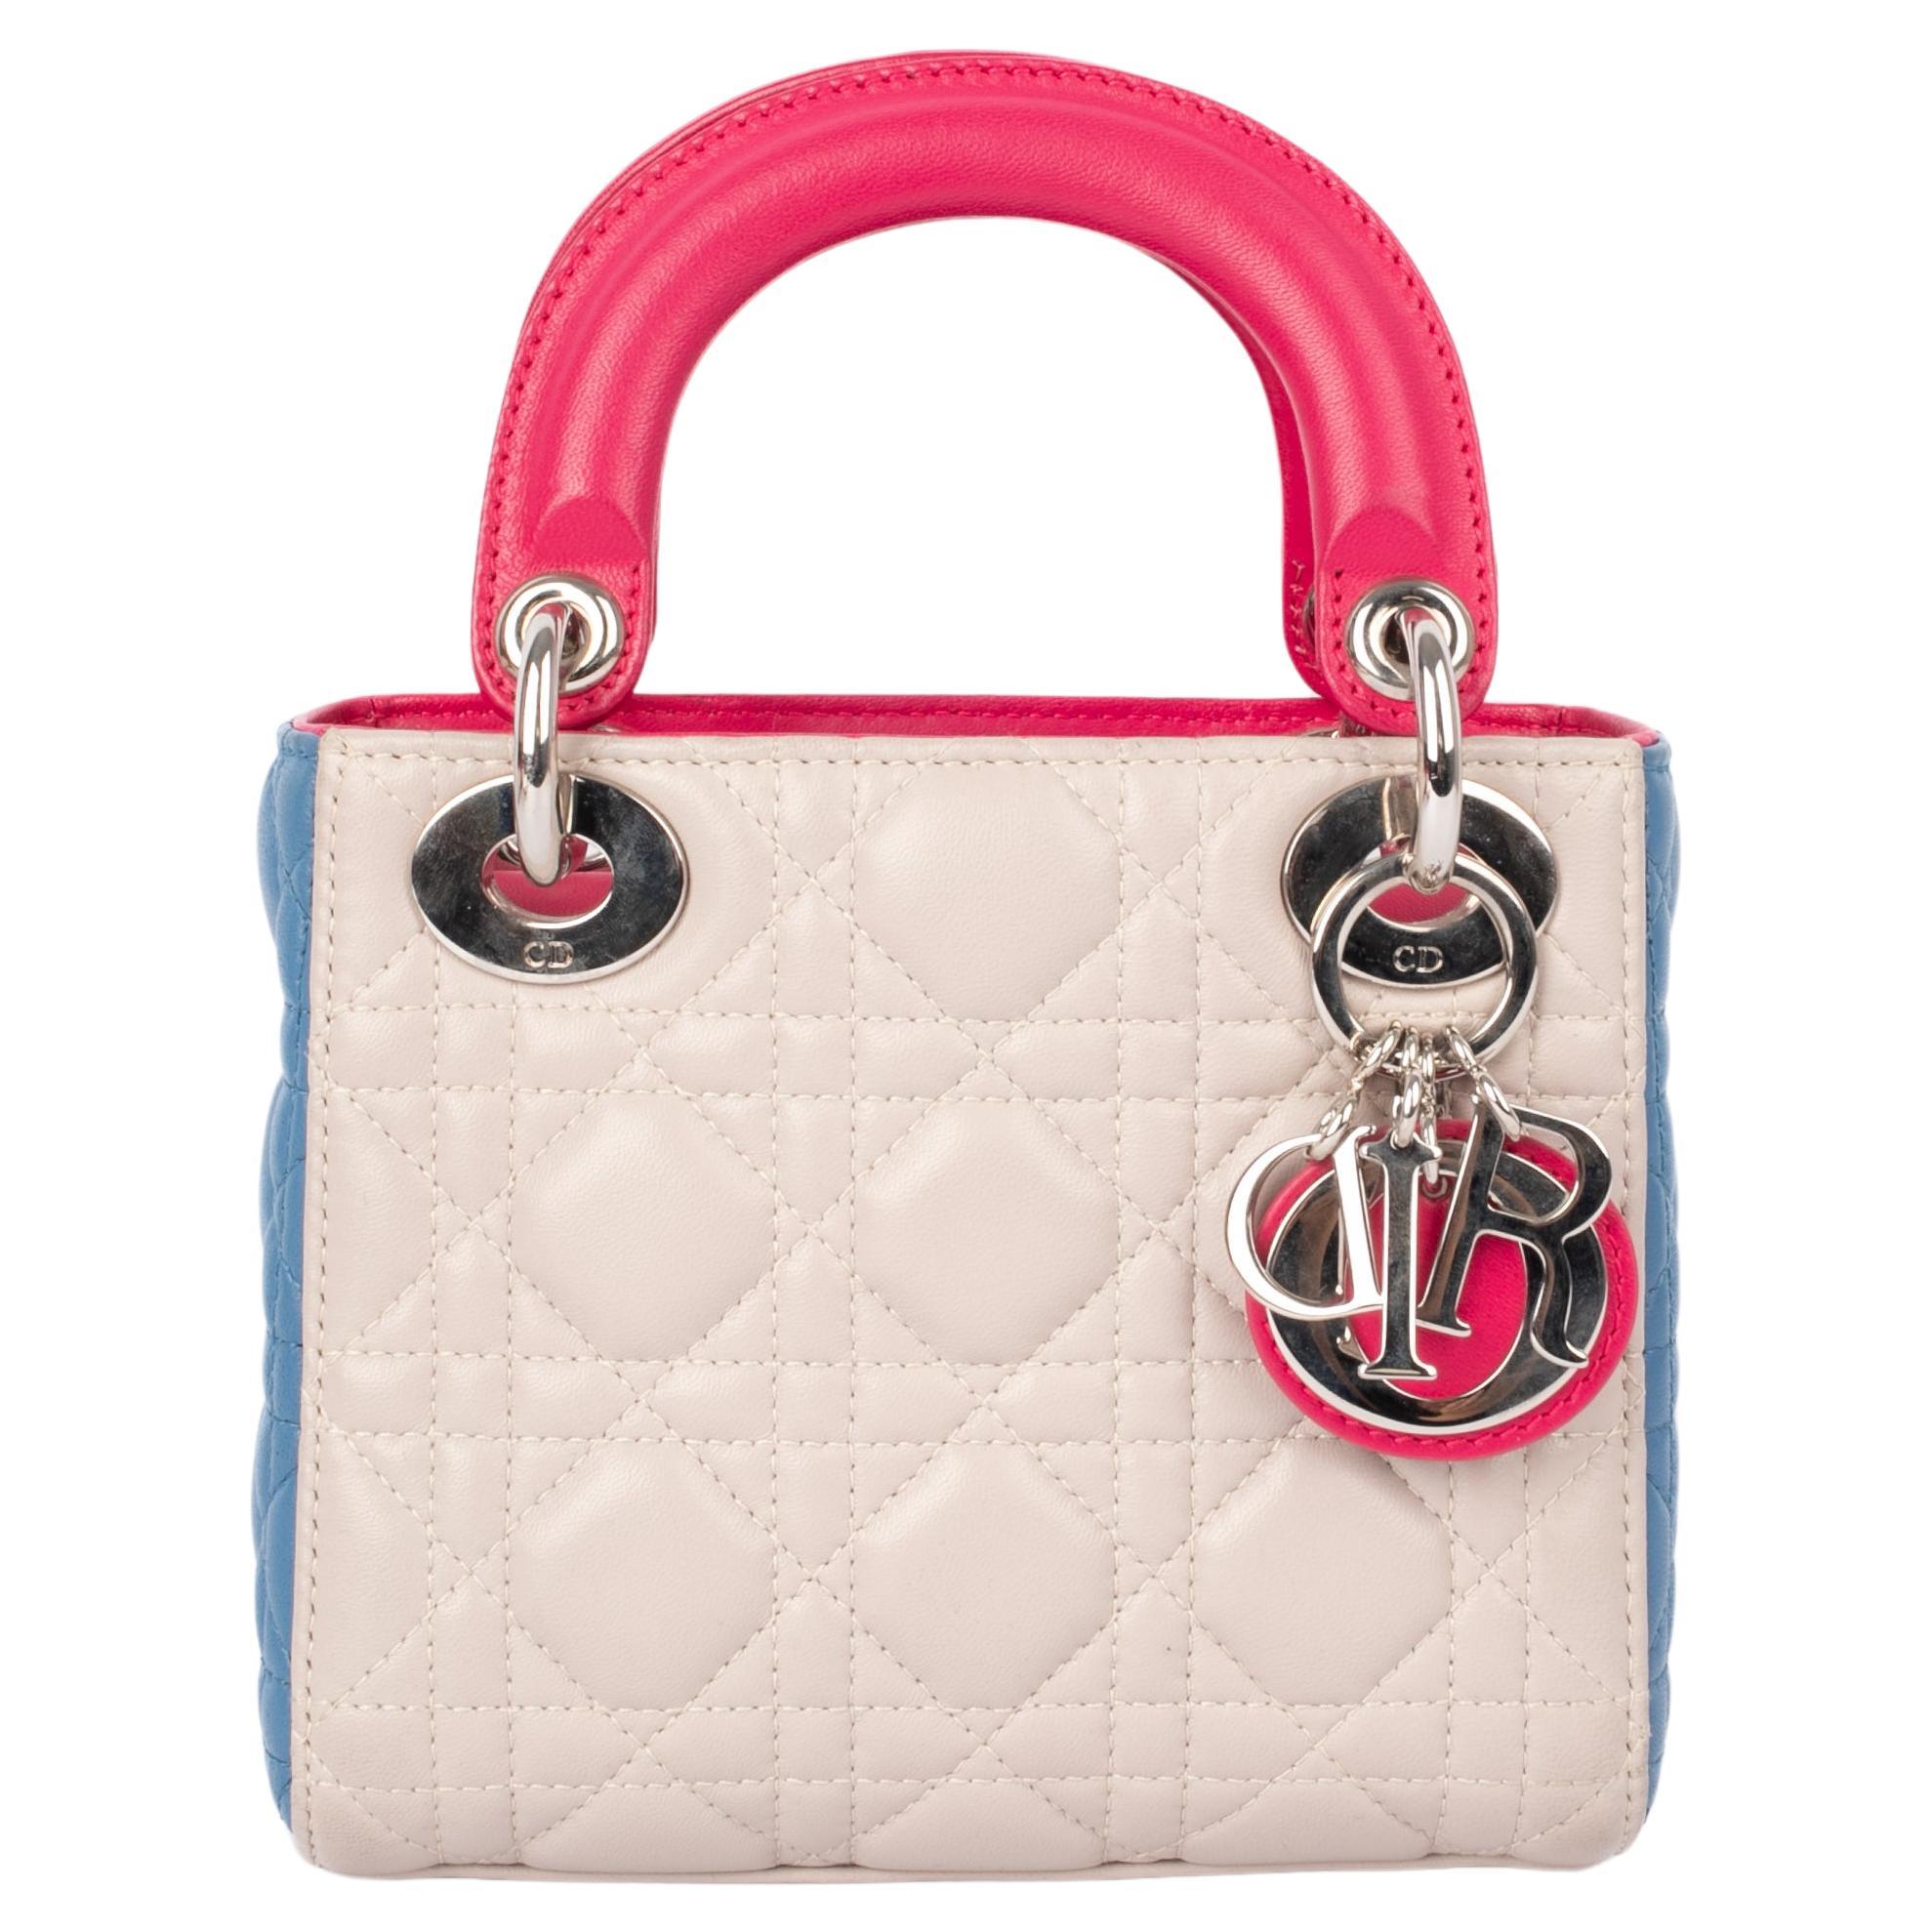 Lady Dior Mini Bag 2014 For Sale